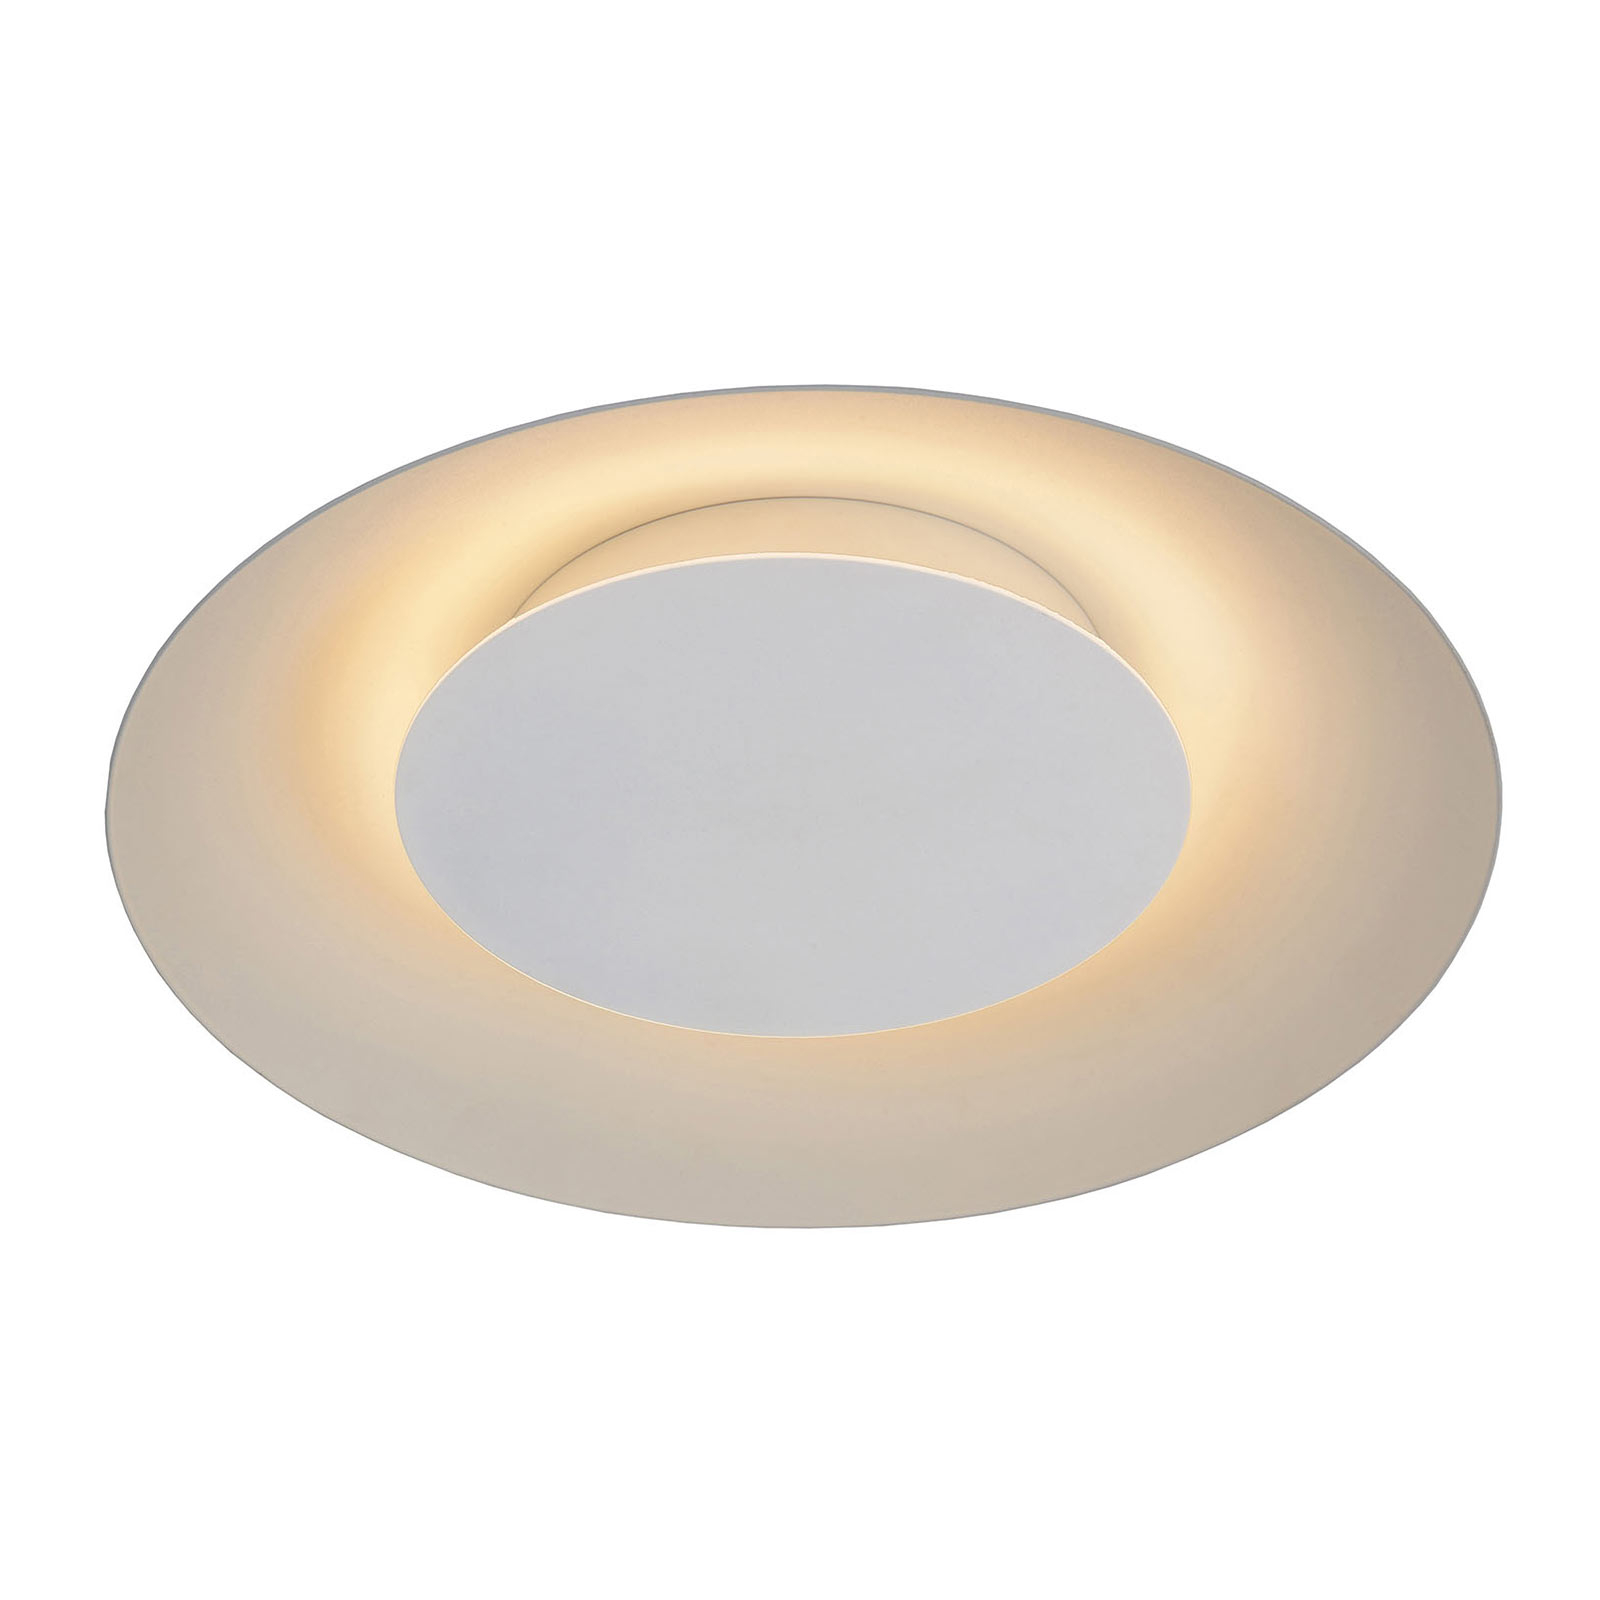 LED plafondlamp Foskal in wit, Ø 34,5 cm